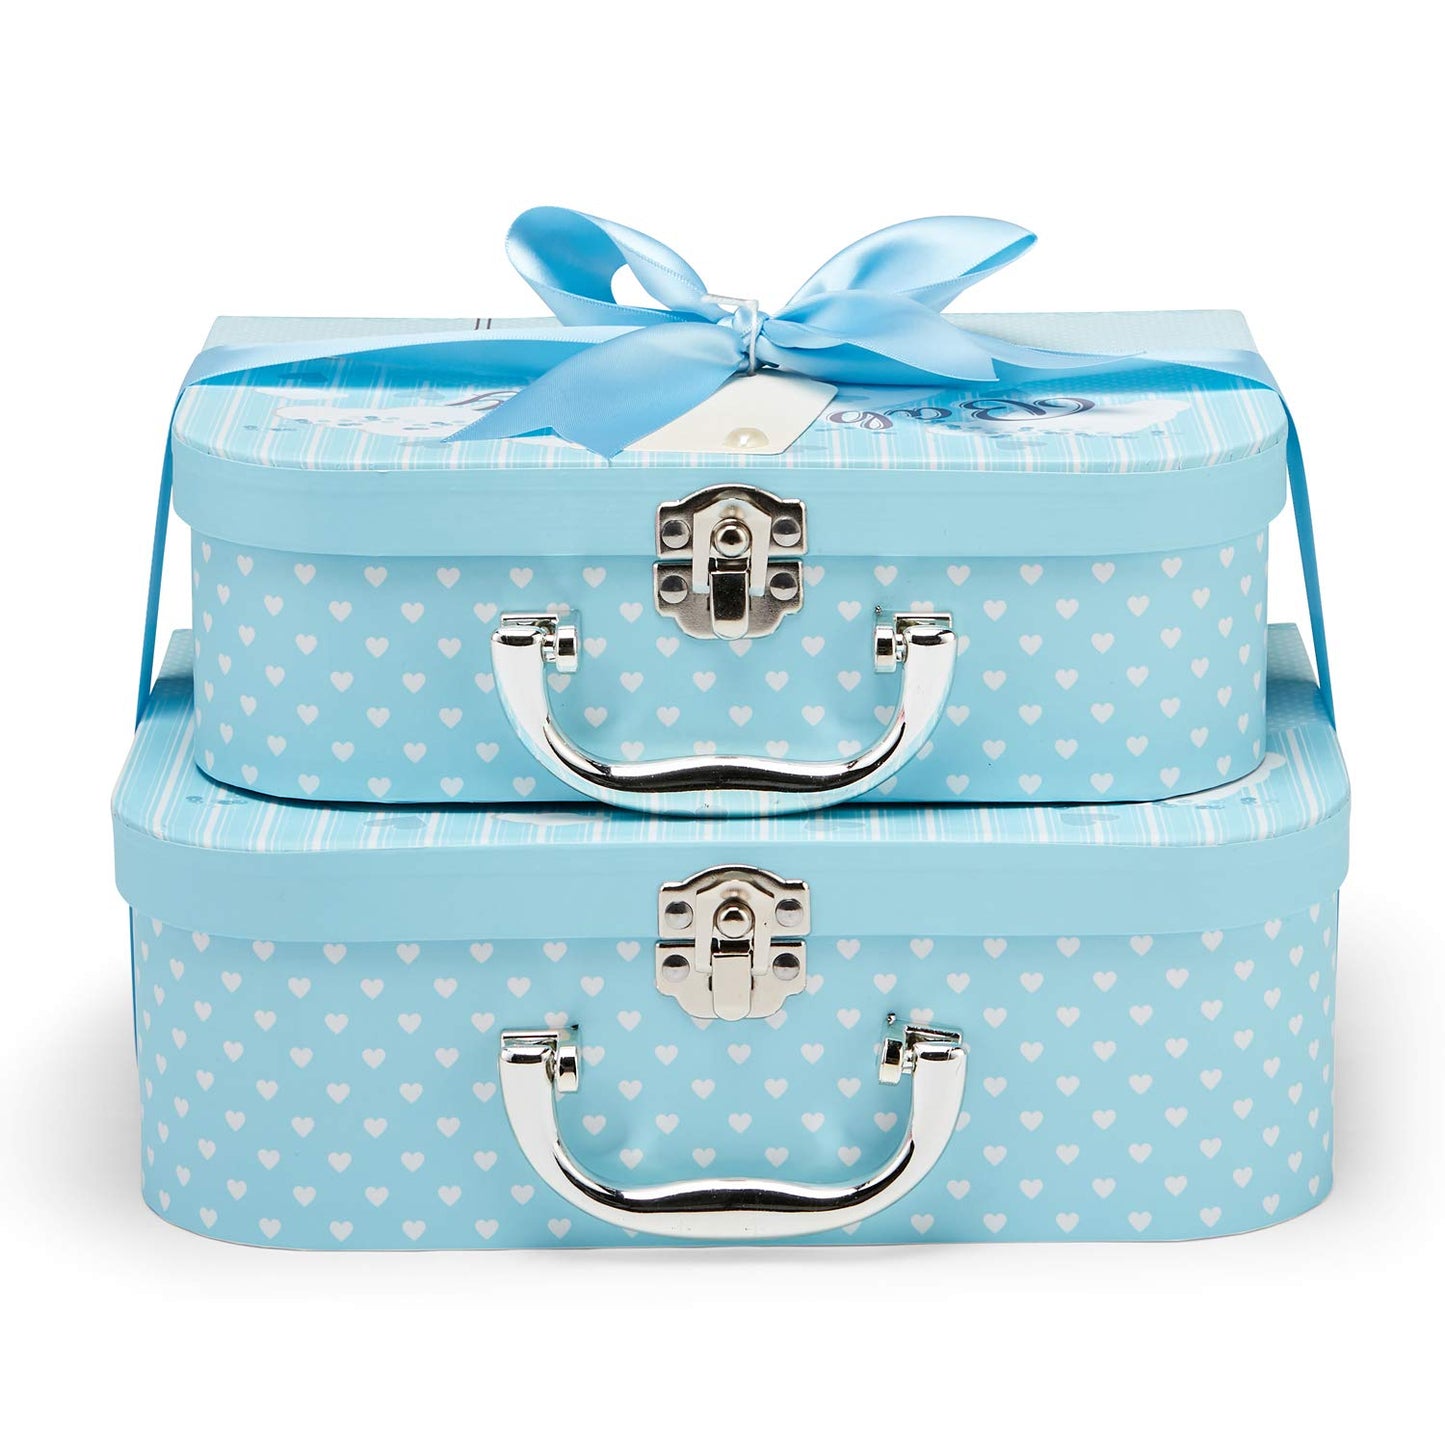 Baby Shower Gift Boy - 12 pcs Newborn Essentials for New Born Baby Boy Gifts